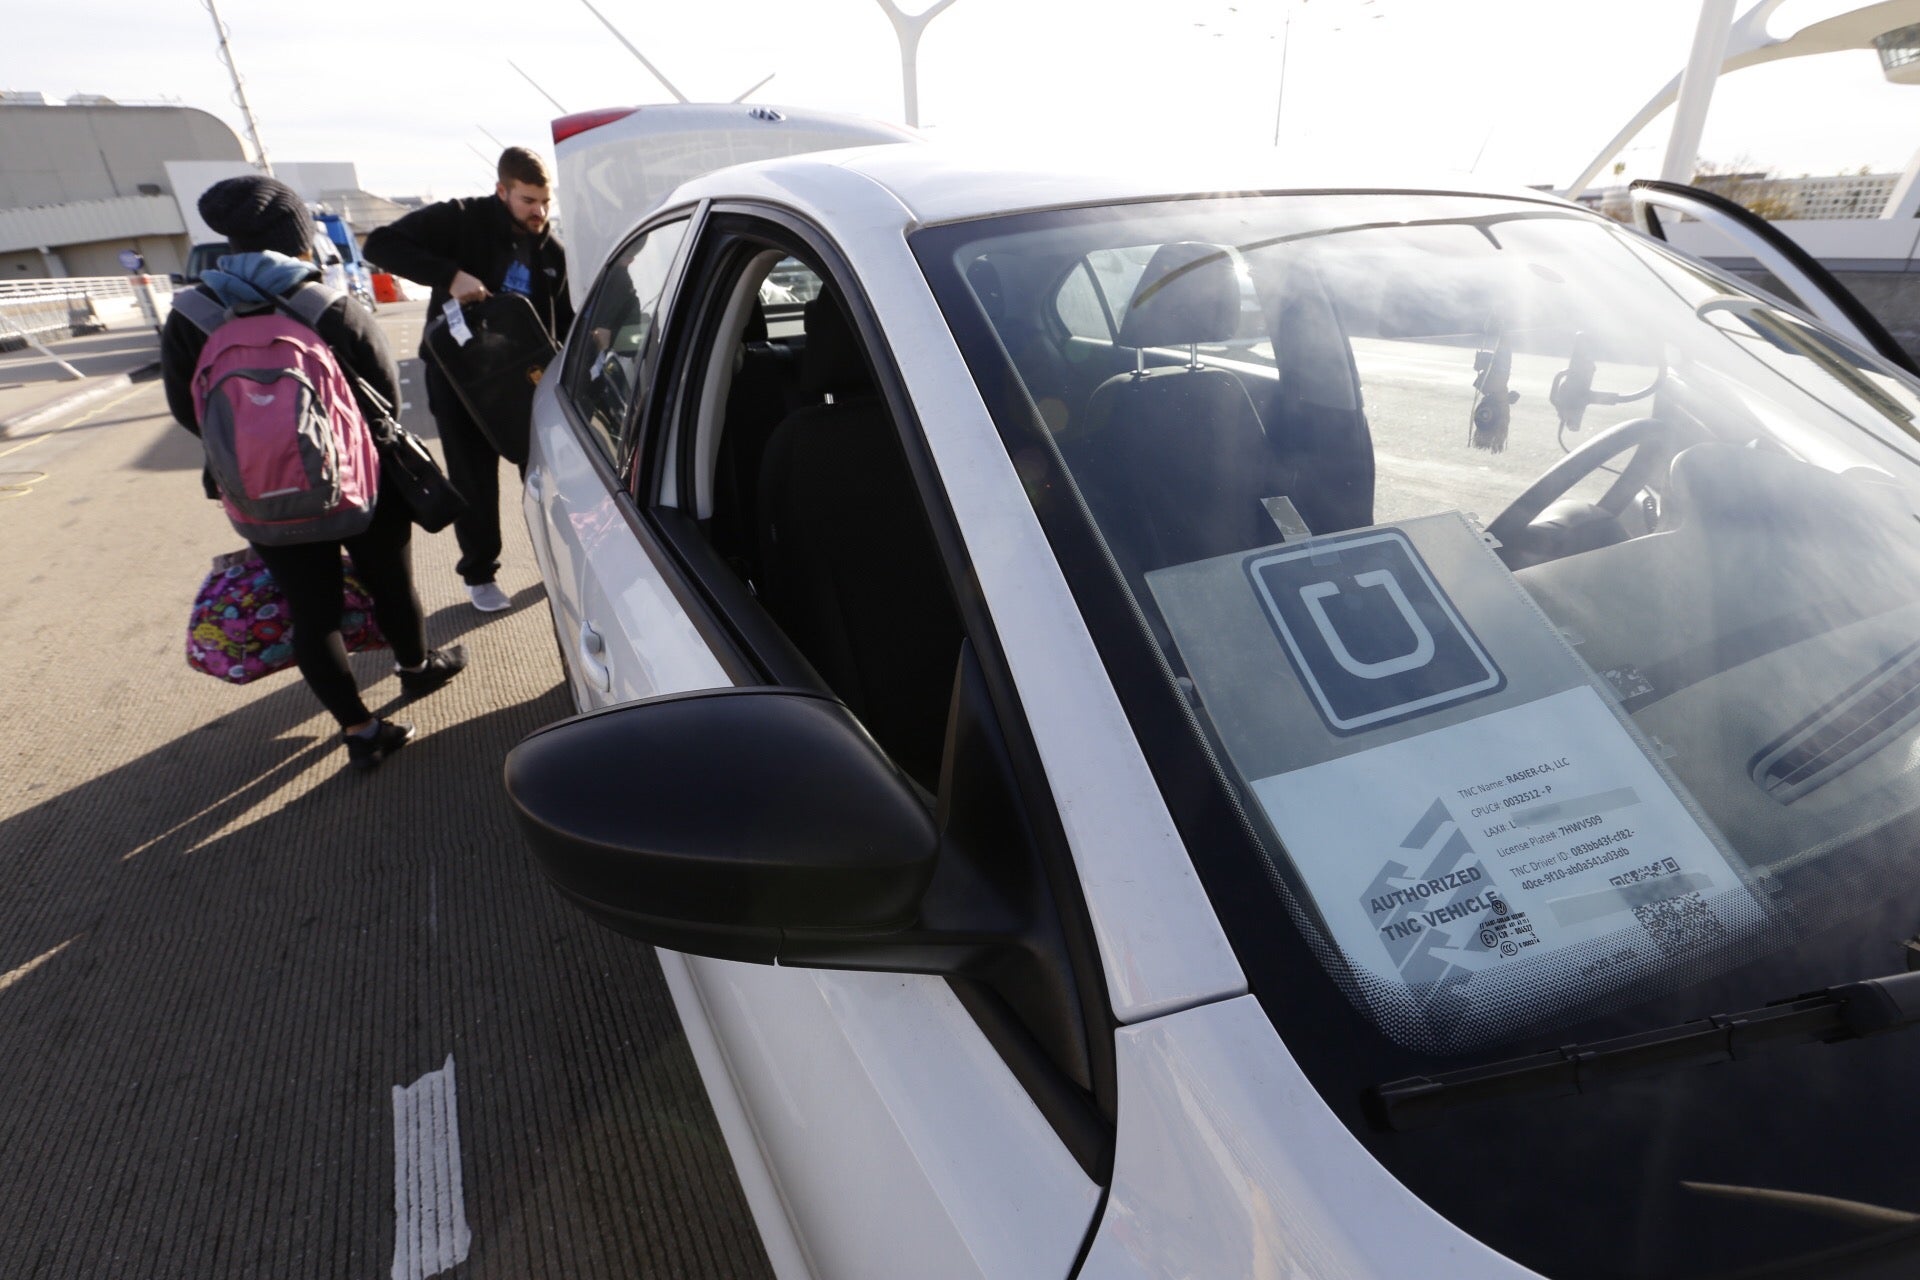 UberX Begins Service at LAX